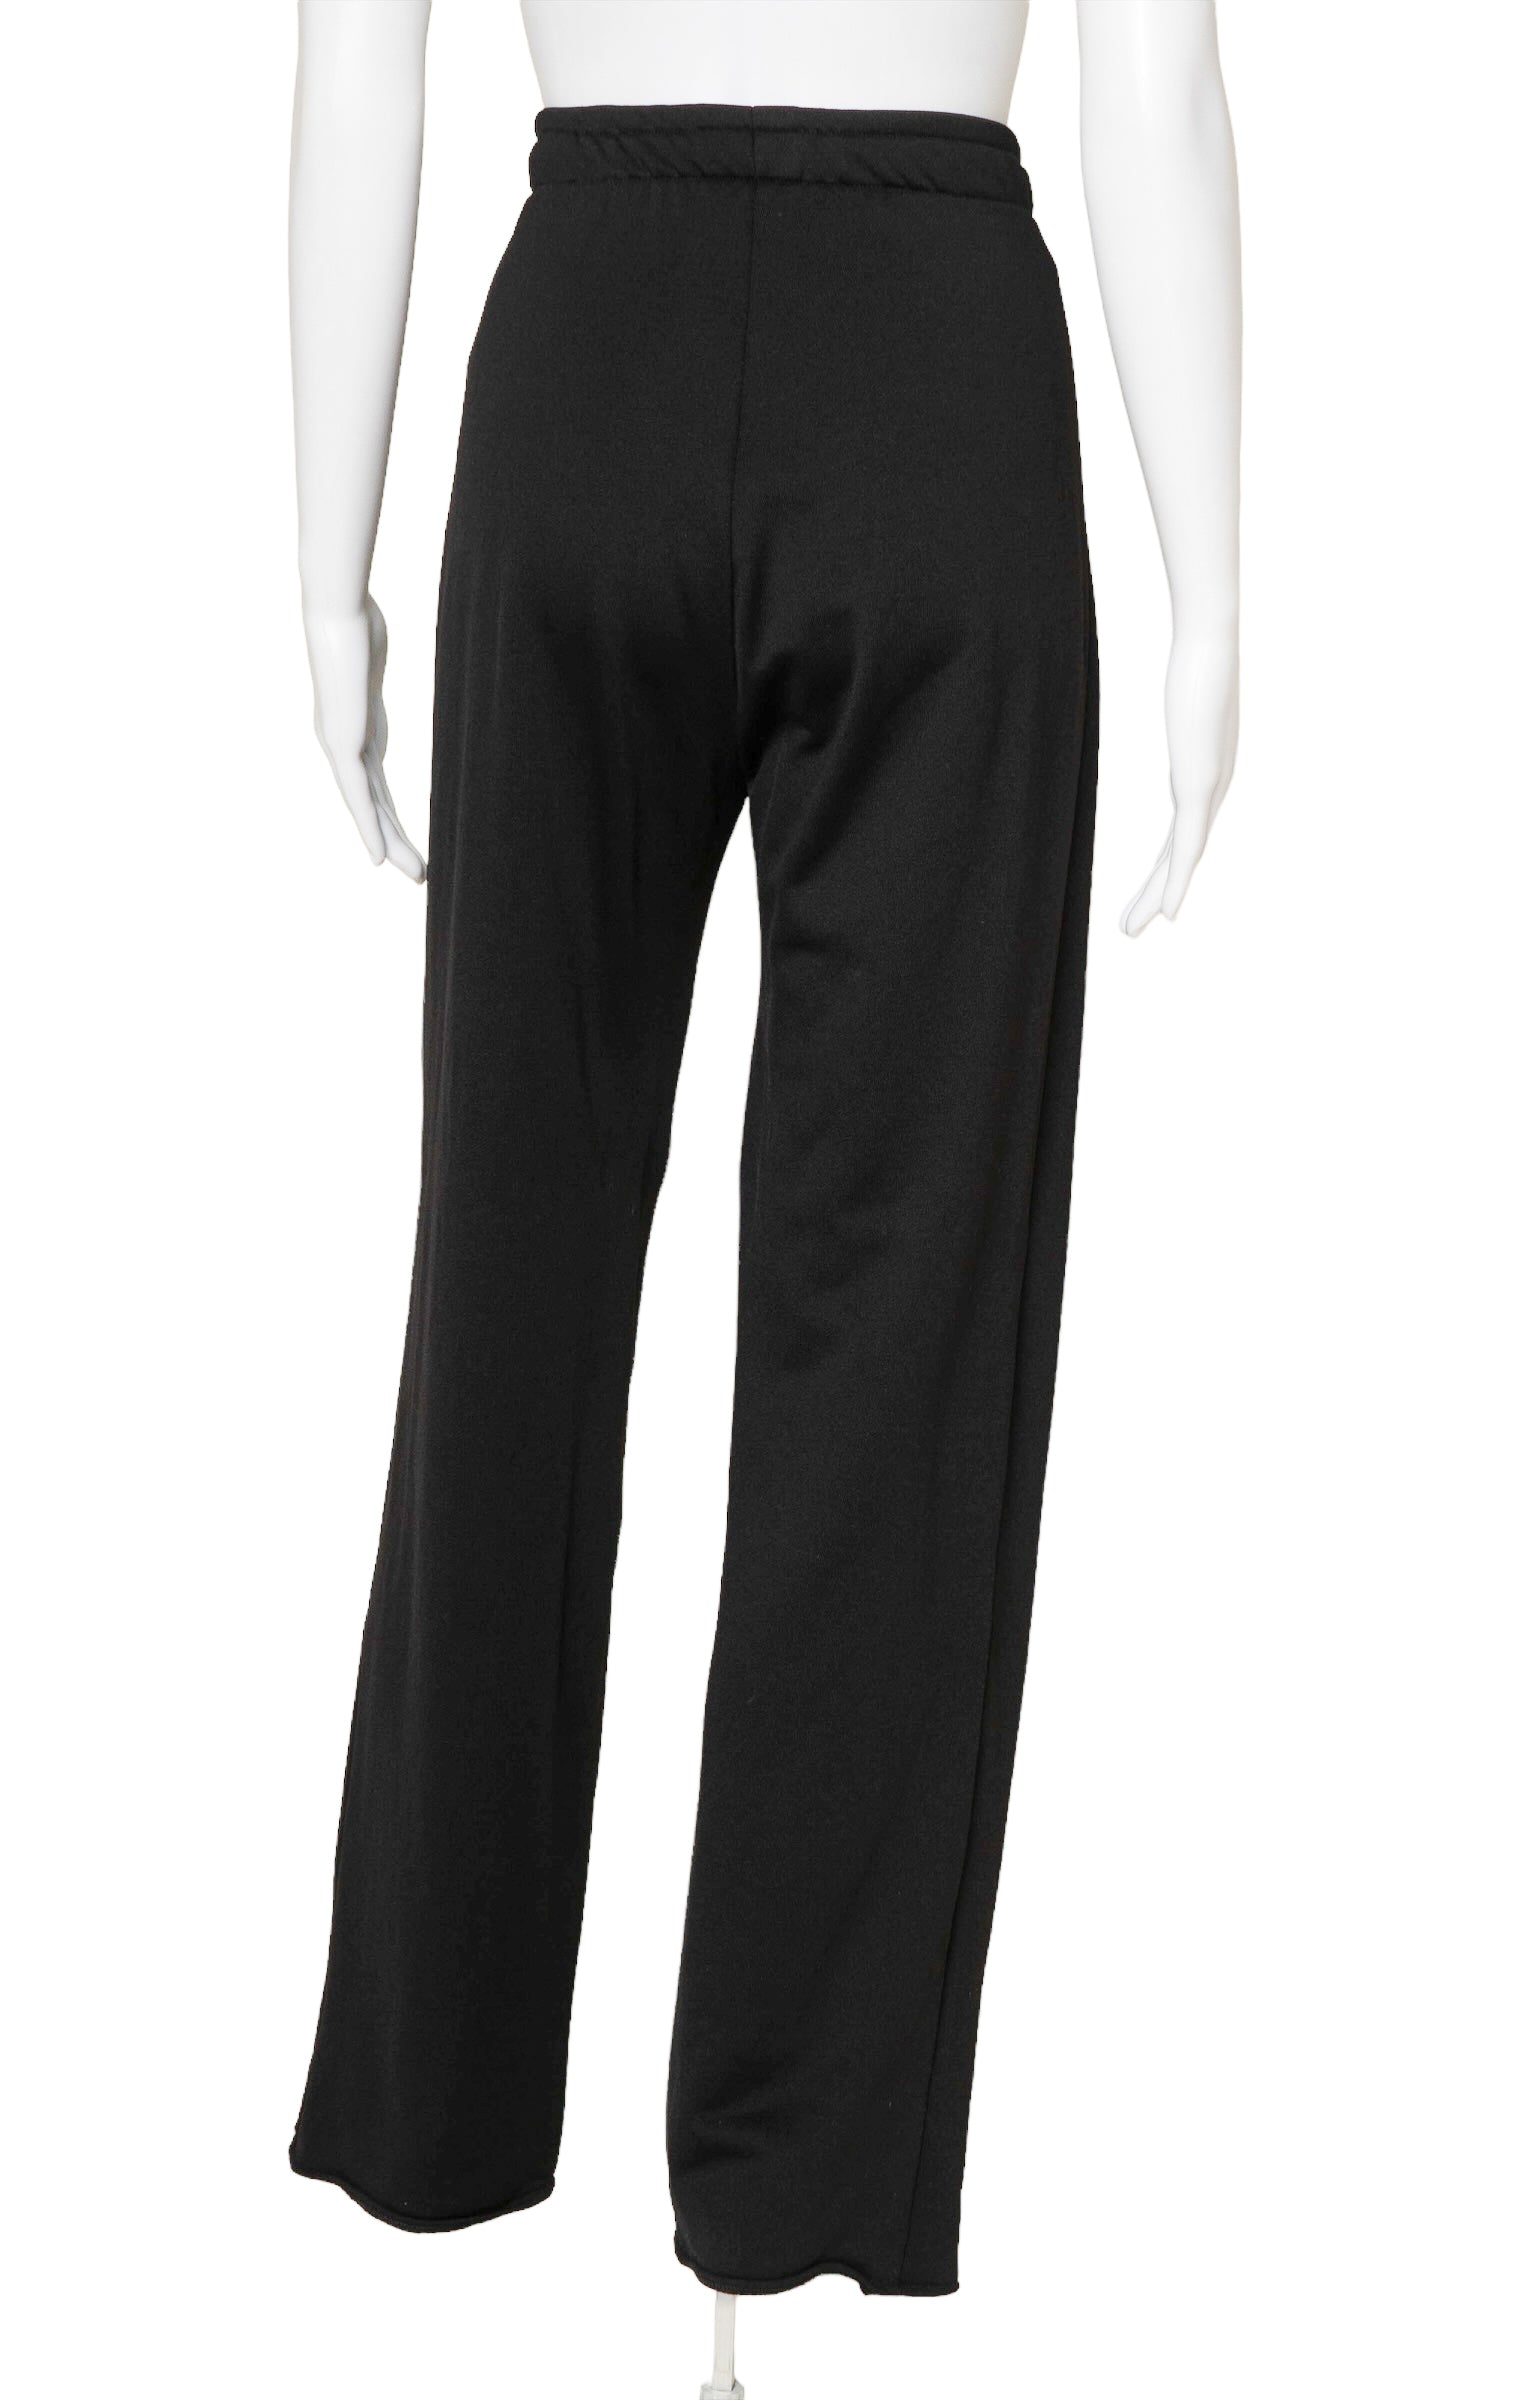 BALENCIAGA Sweatpants Size: No size tags, fit like XS/S – Kardashian Kloset